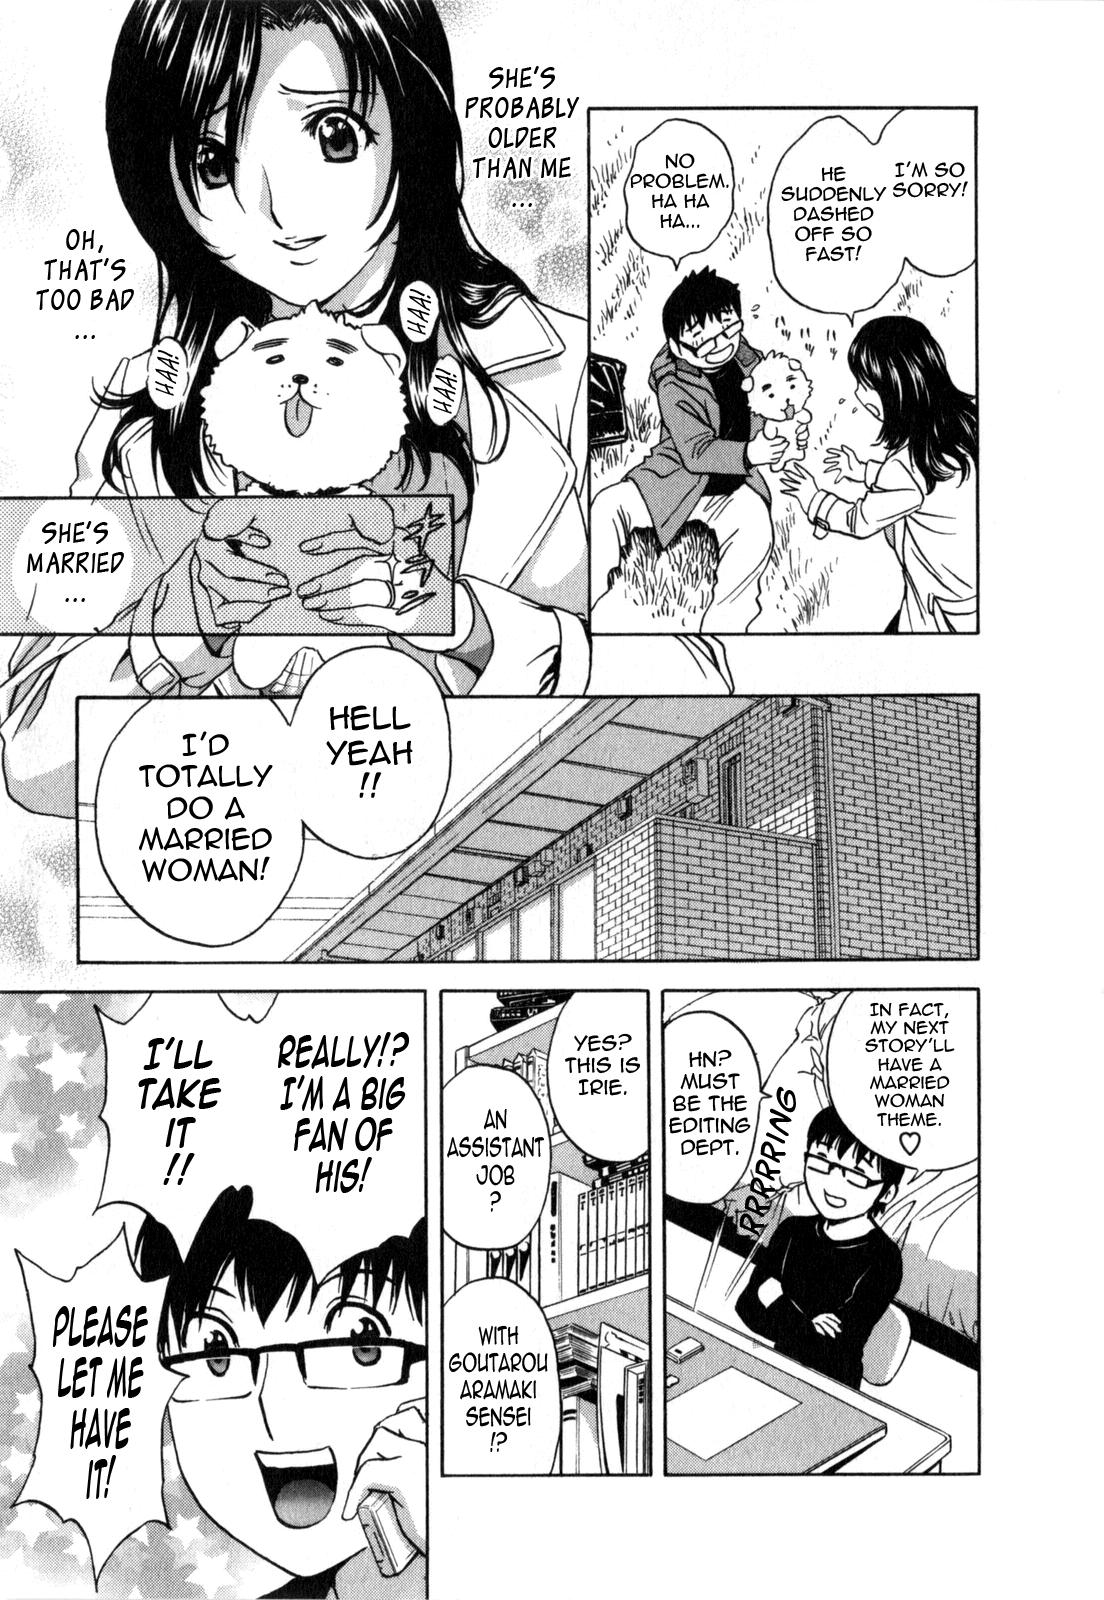 [Hidemaru] Life with Married Women Just Like a Manga 1 - Ch. 1-7 [English] {Tadanohito} 11